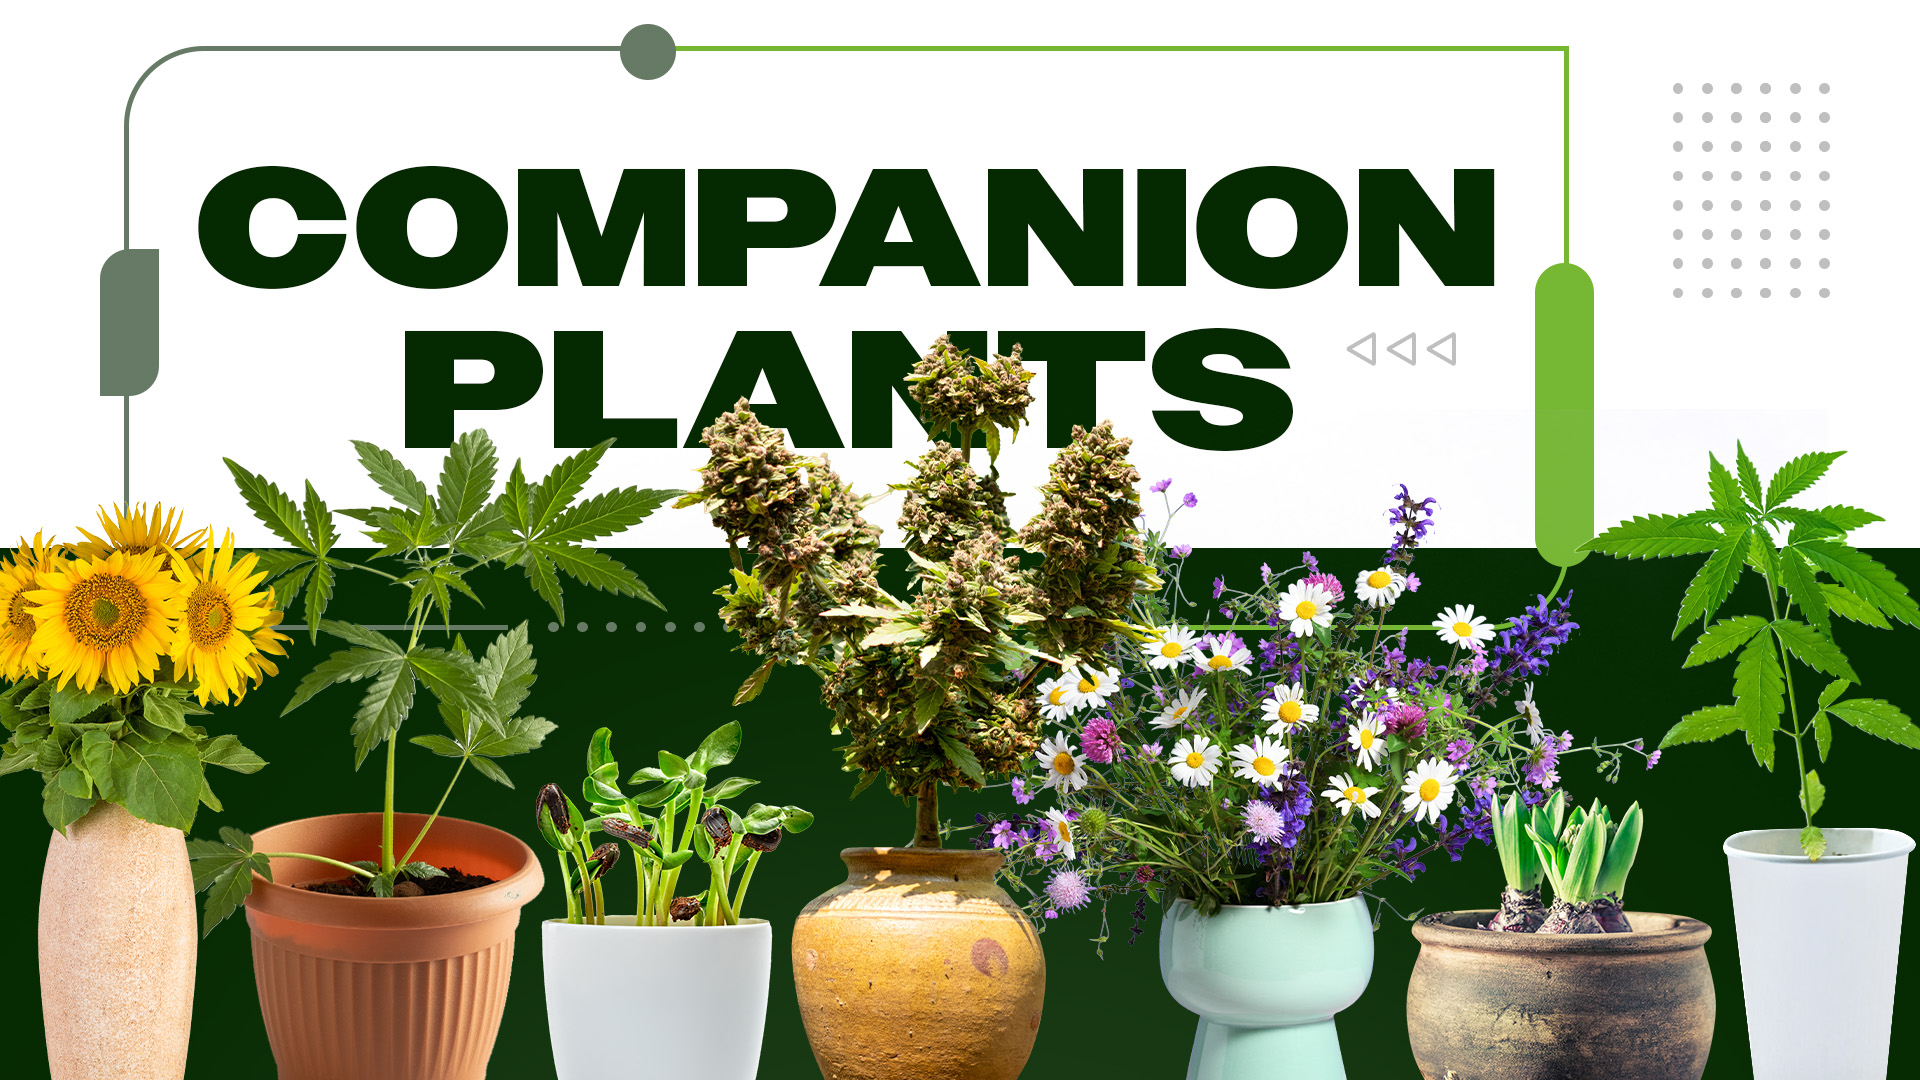 Best Companion Plants for Cannabis Gardens